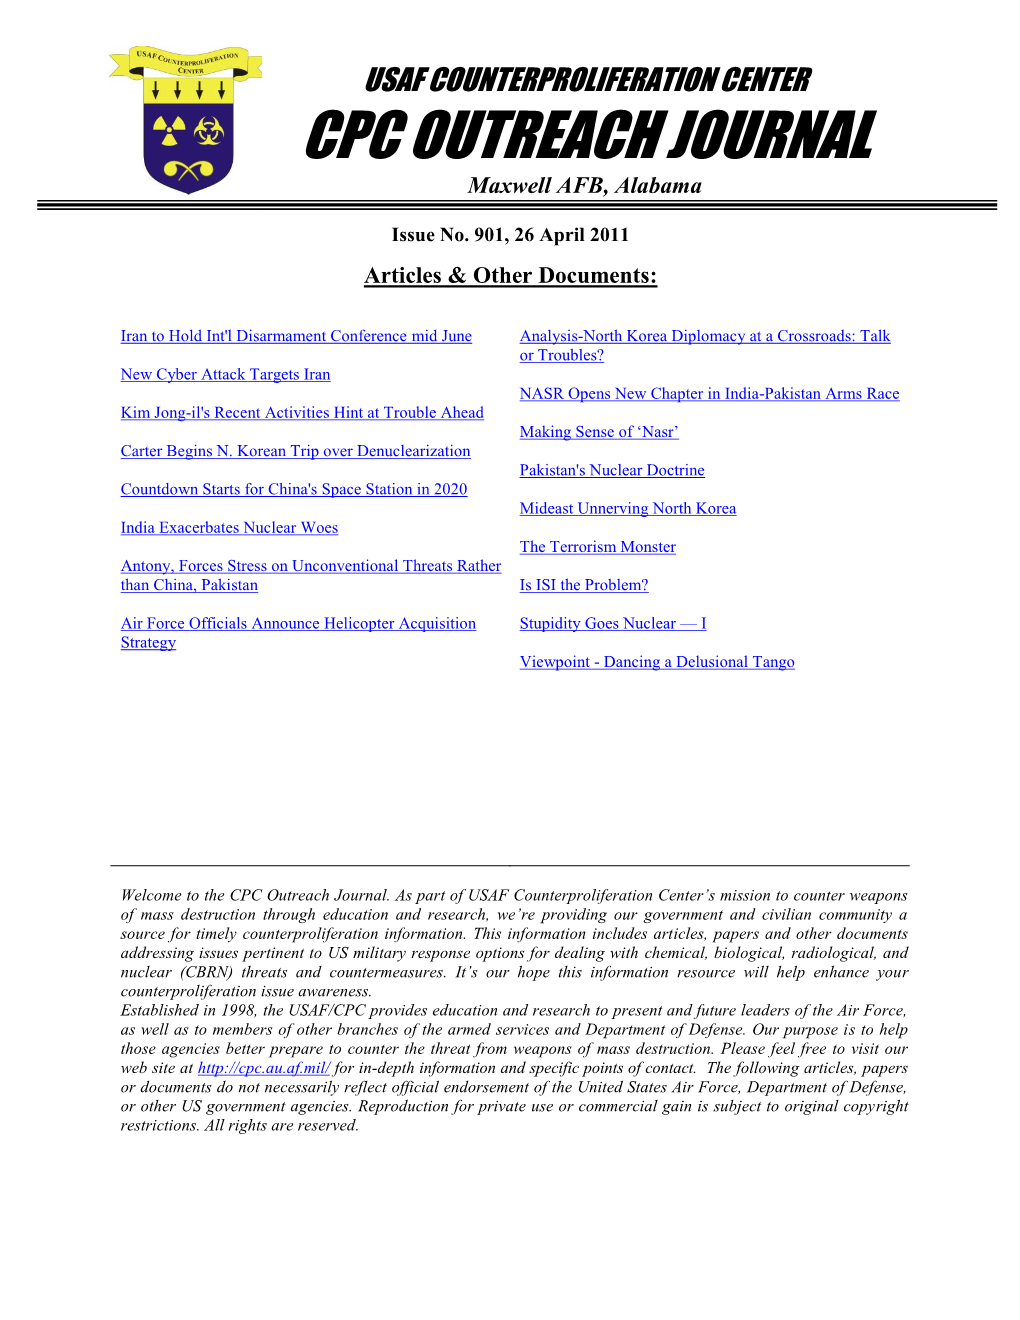 USAF Counterproliferation Center CPC Outreach Journal #901